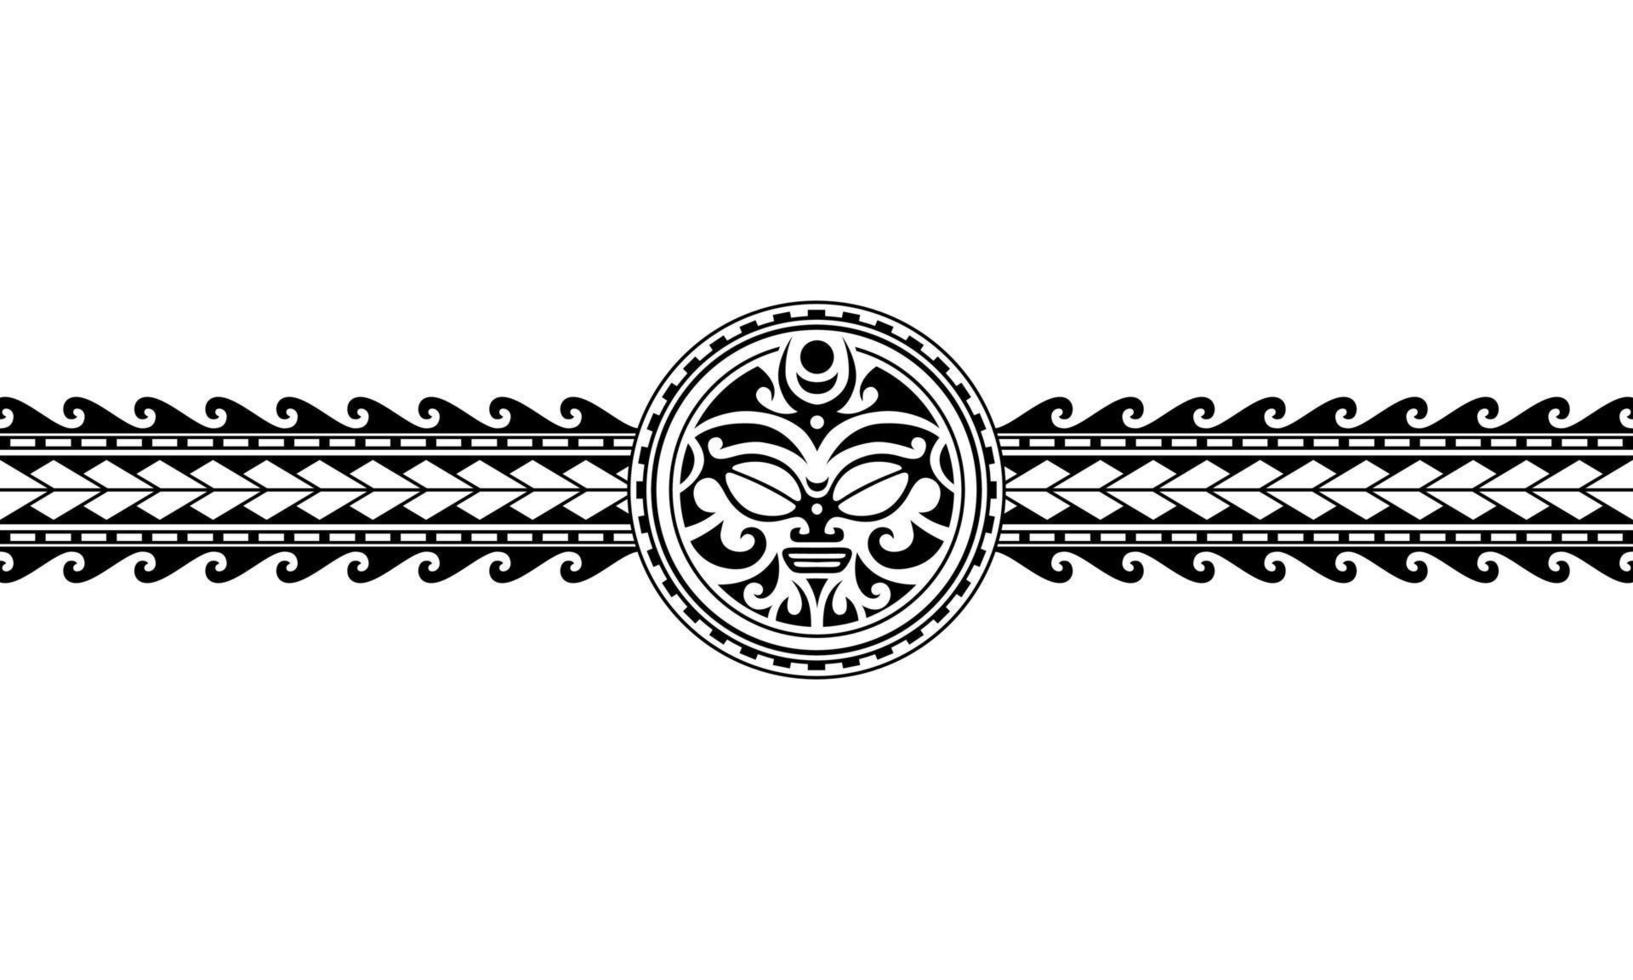 Maori polynesian tattoo border tribal sleeve pattern vector. Samoan bracelet tattoo for arm or foot. vector